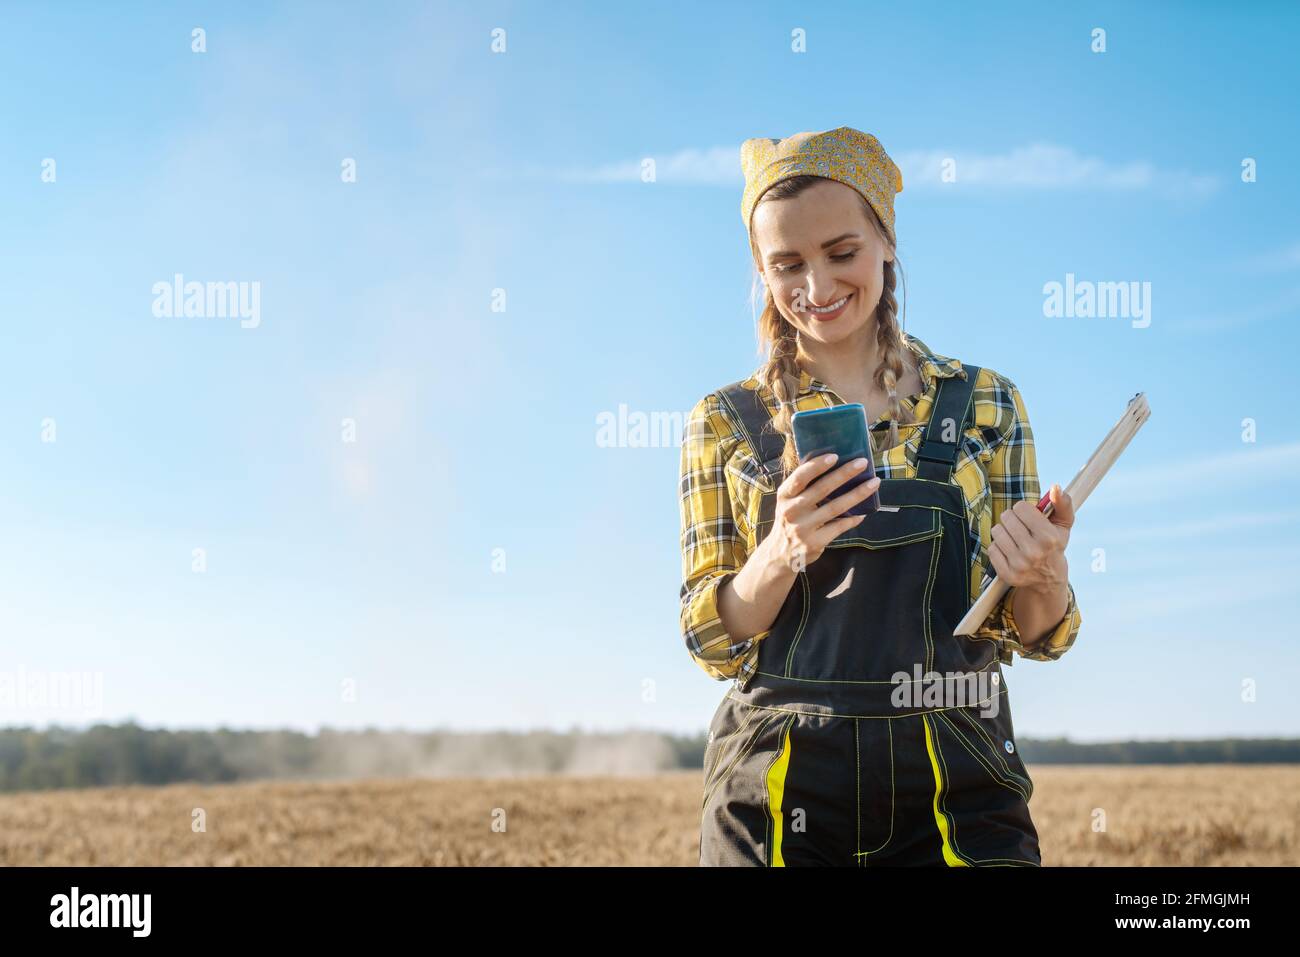 Farmer using her phone on a grain field Stock Photo